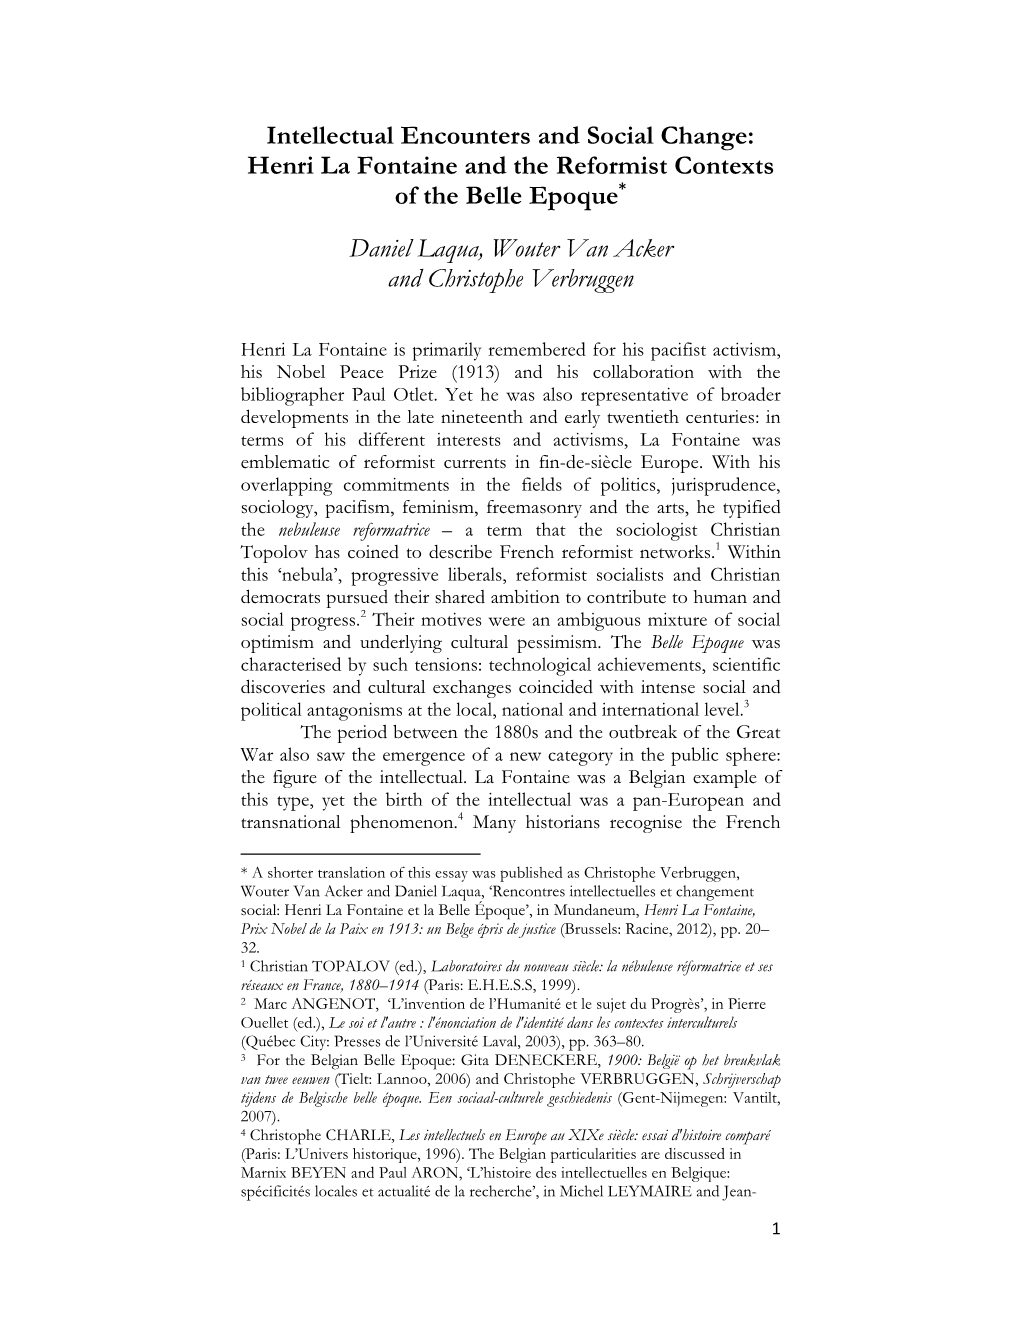 Henri La Fontaine and the Reformist Contexts of the Belle Epoque*